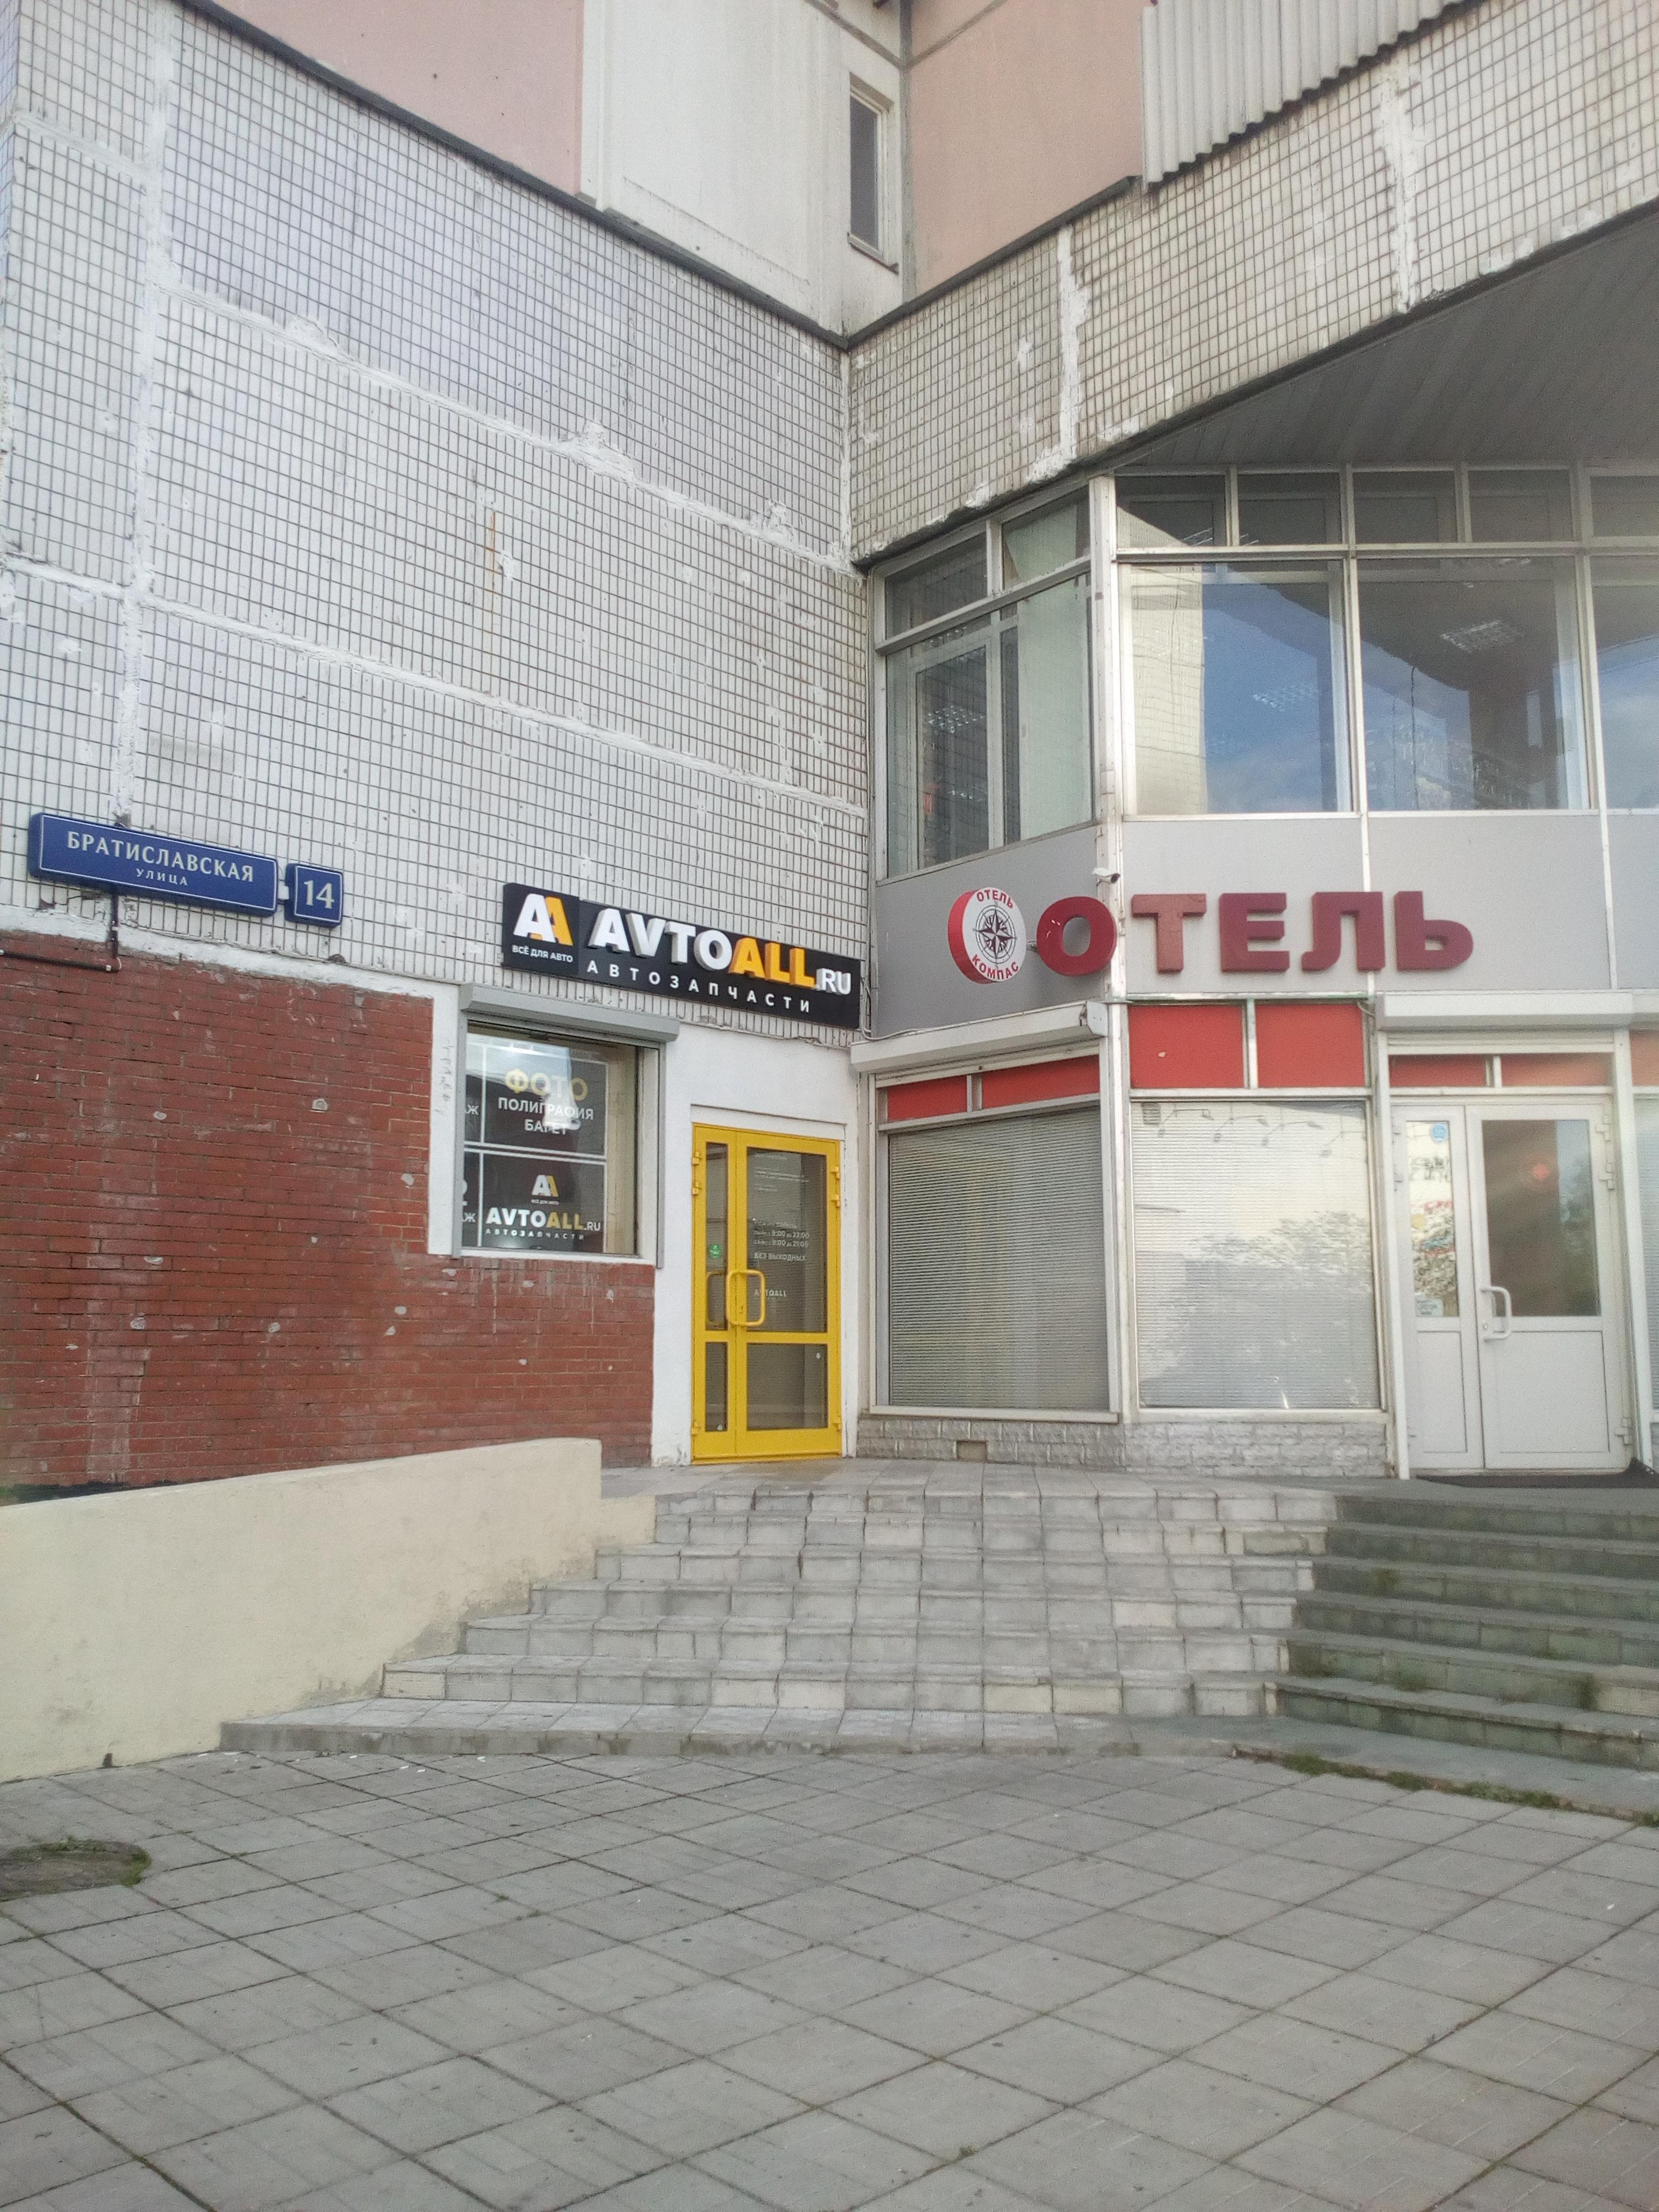 Avtoall, магазин автозапчастей, Братиславская улица, 14 ст2, 2 этаж